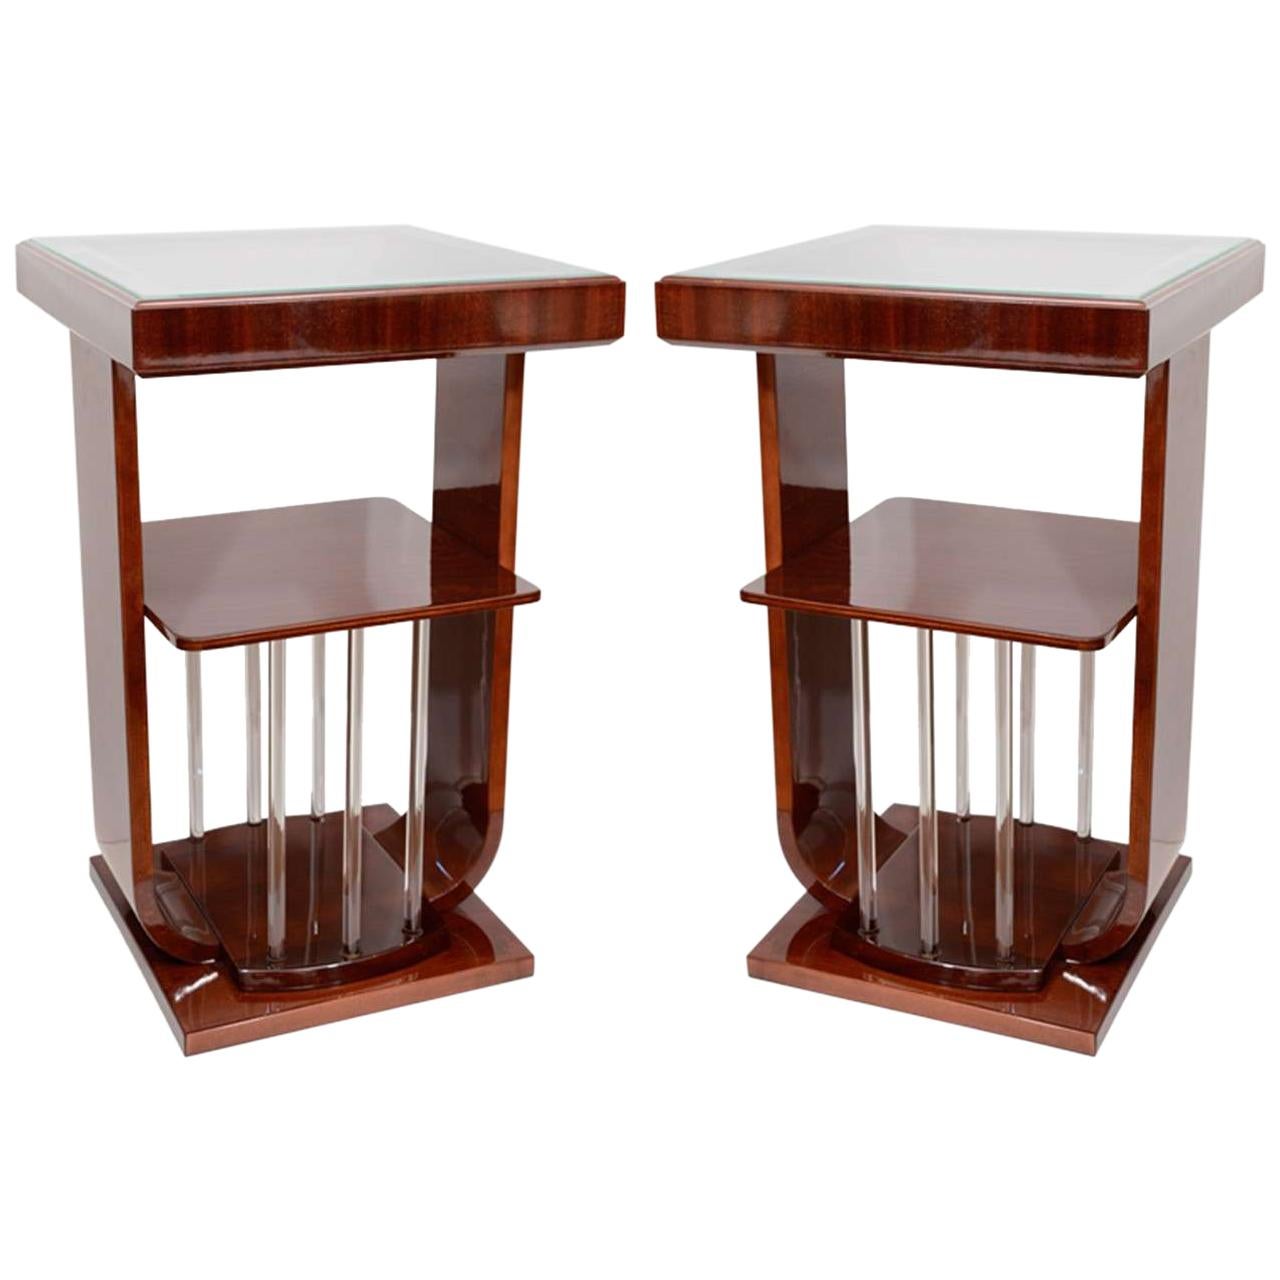 Single Art Deco Square Lamp Table For Sale